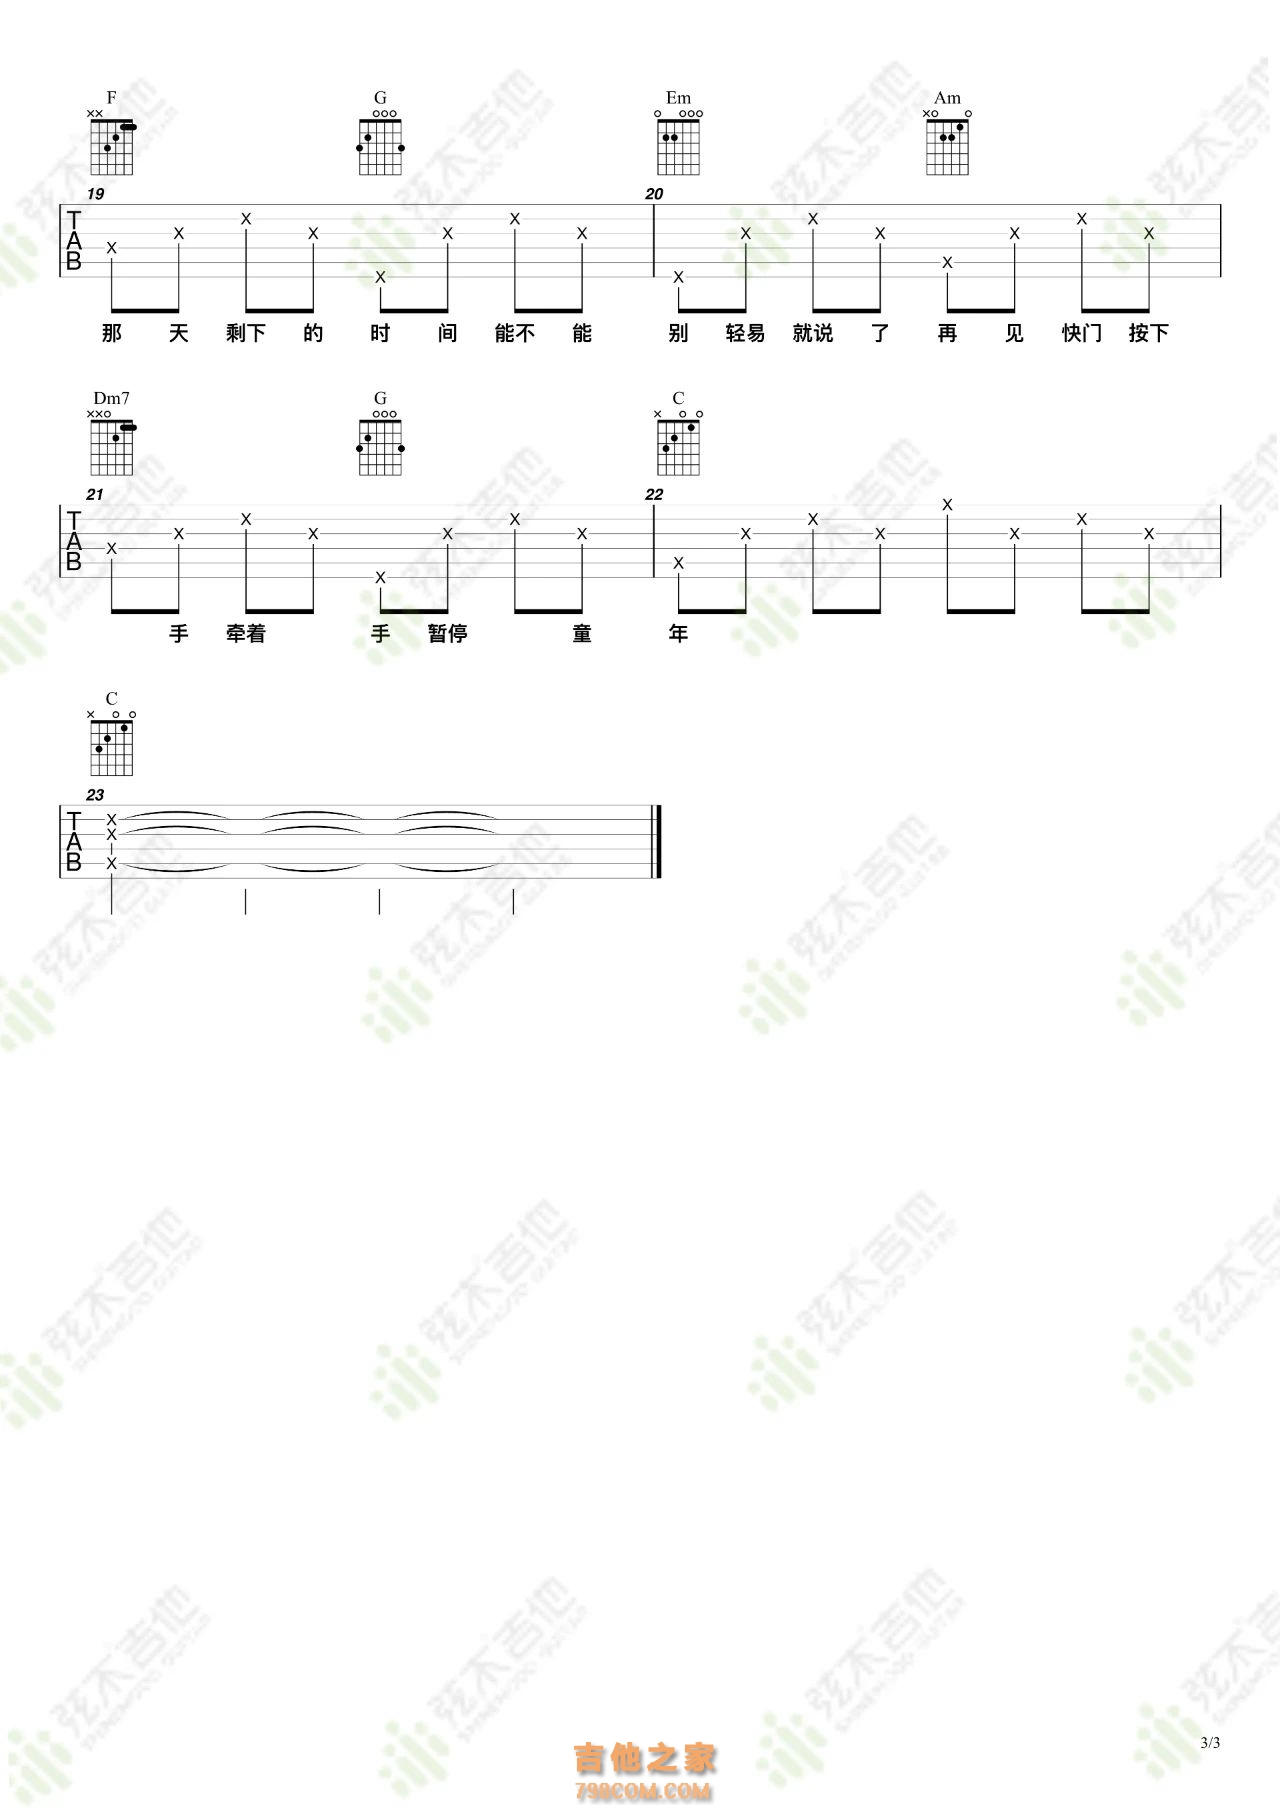 TFBOYS-Guardian Sheet Music pdf, - Free Score Download ★